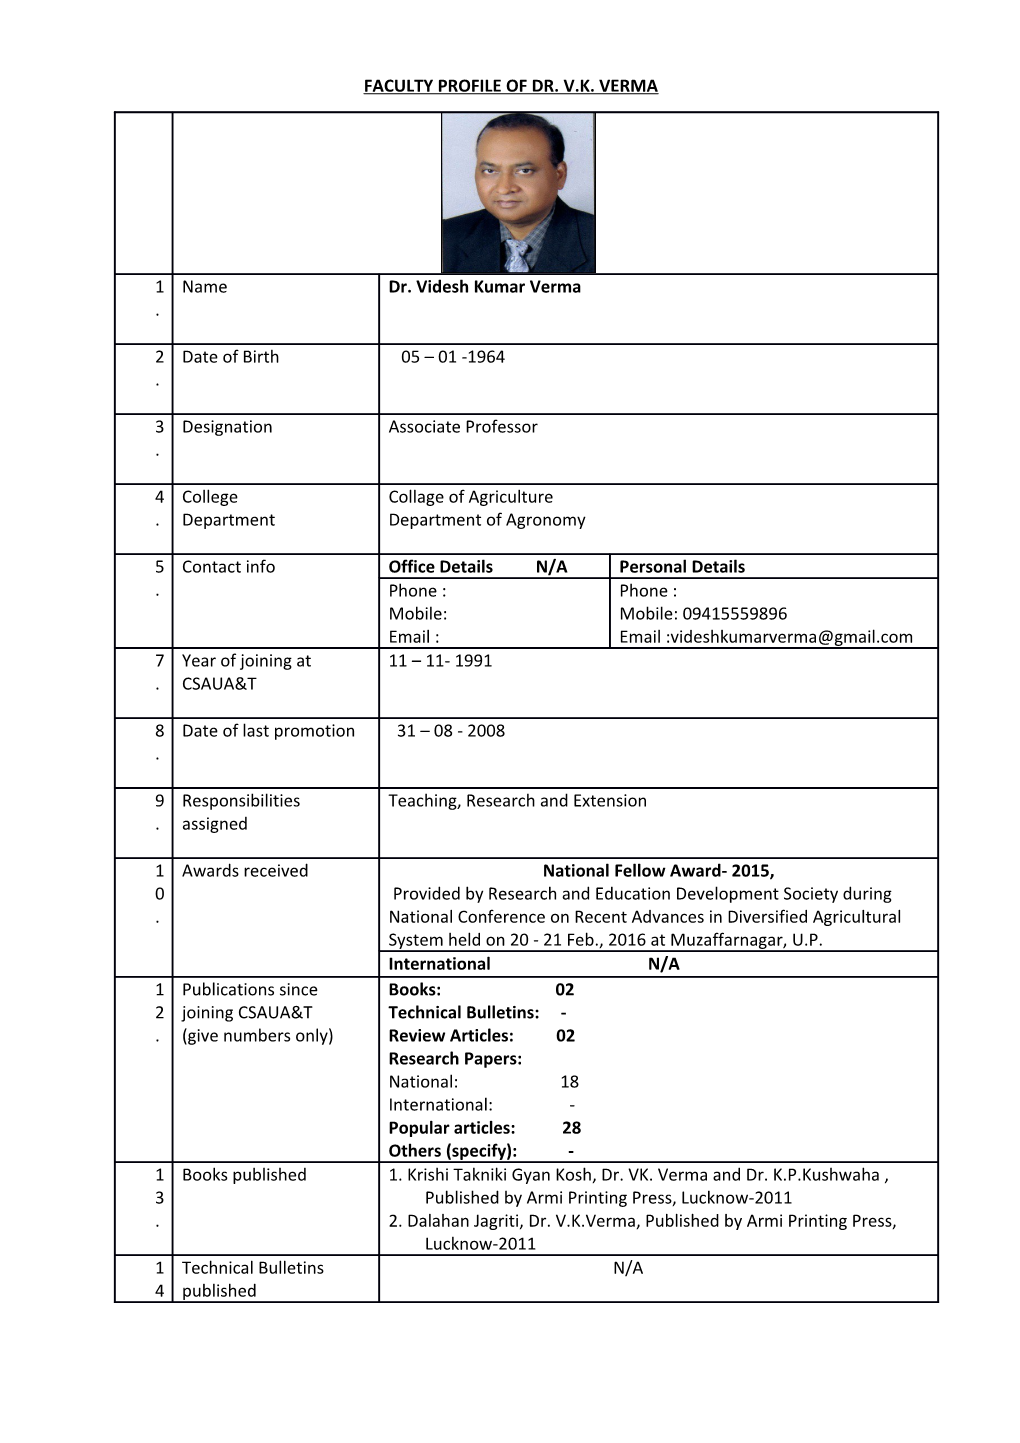 Faculty Profile of Dr. V.K. Verma